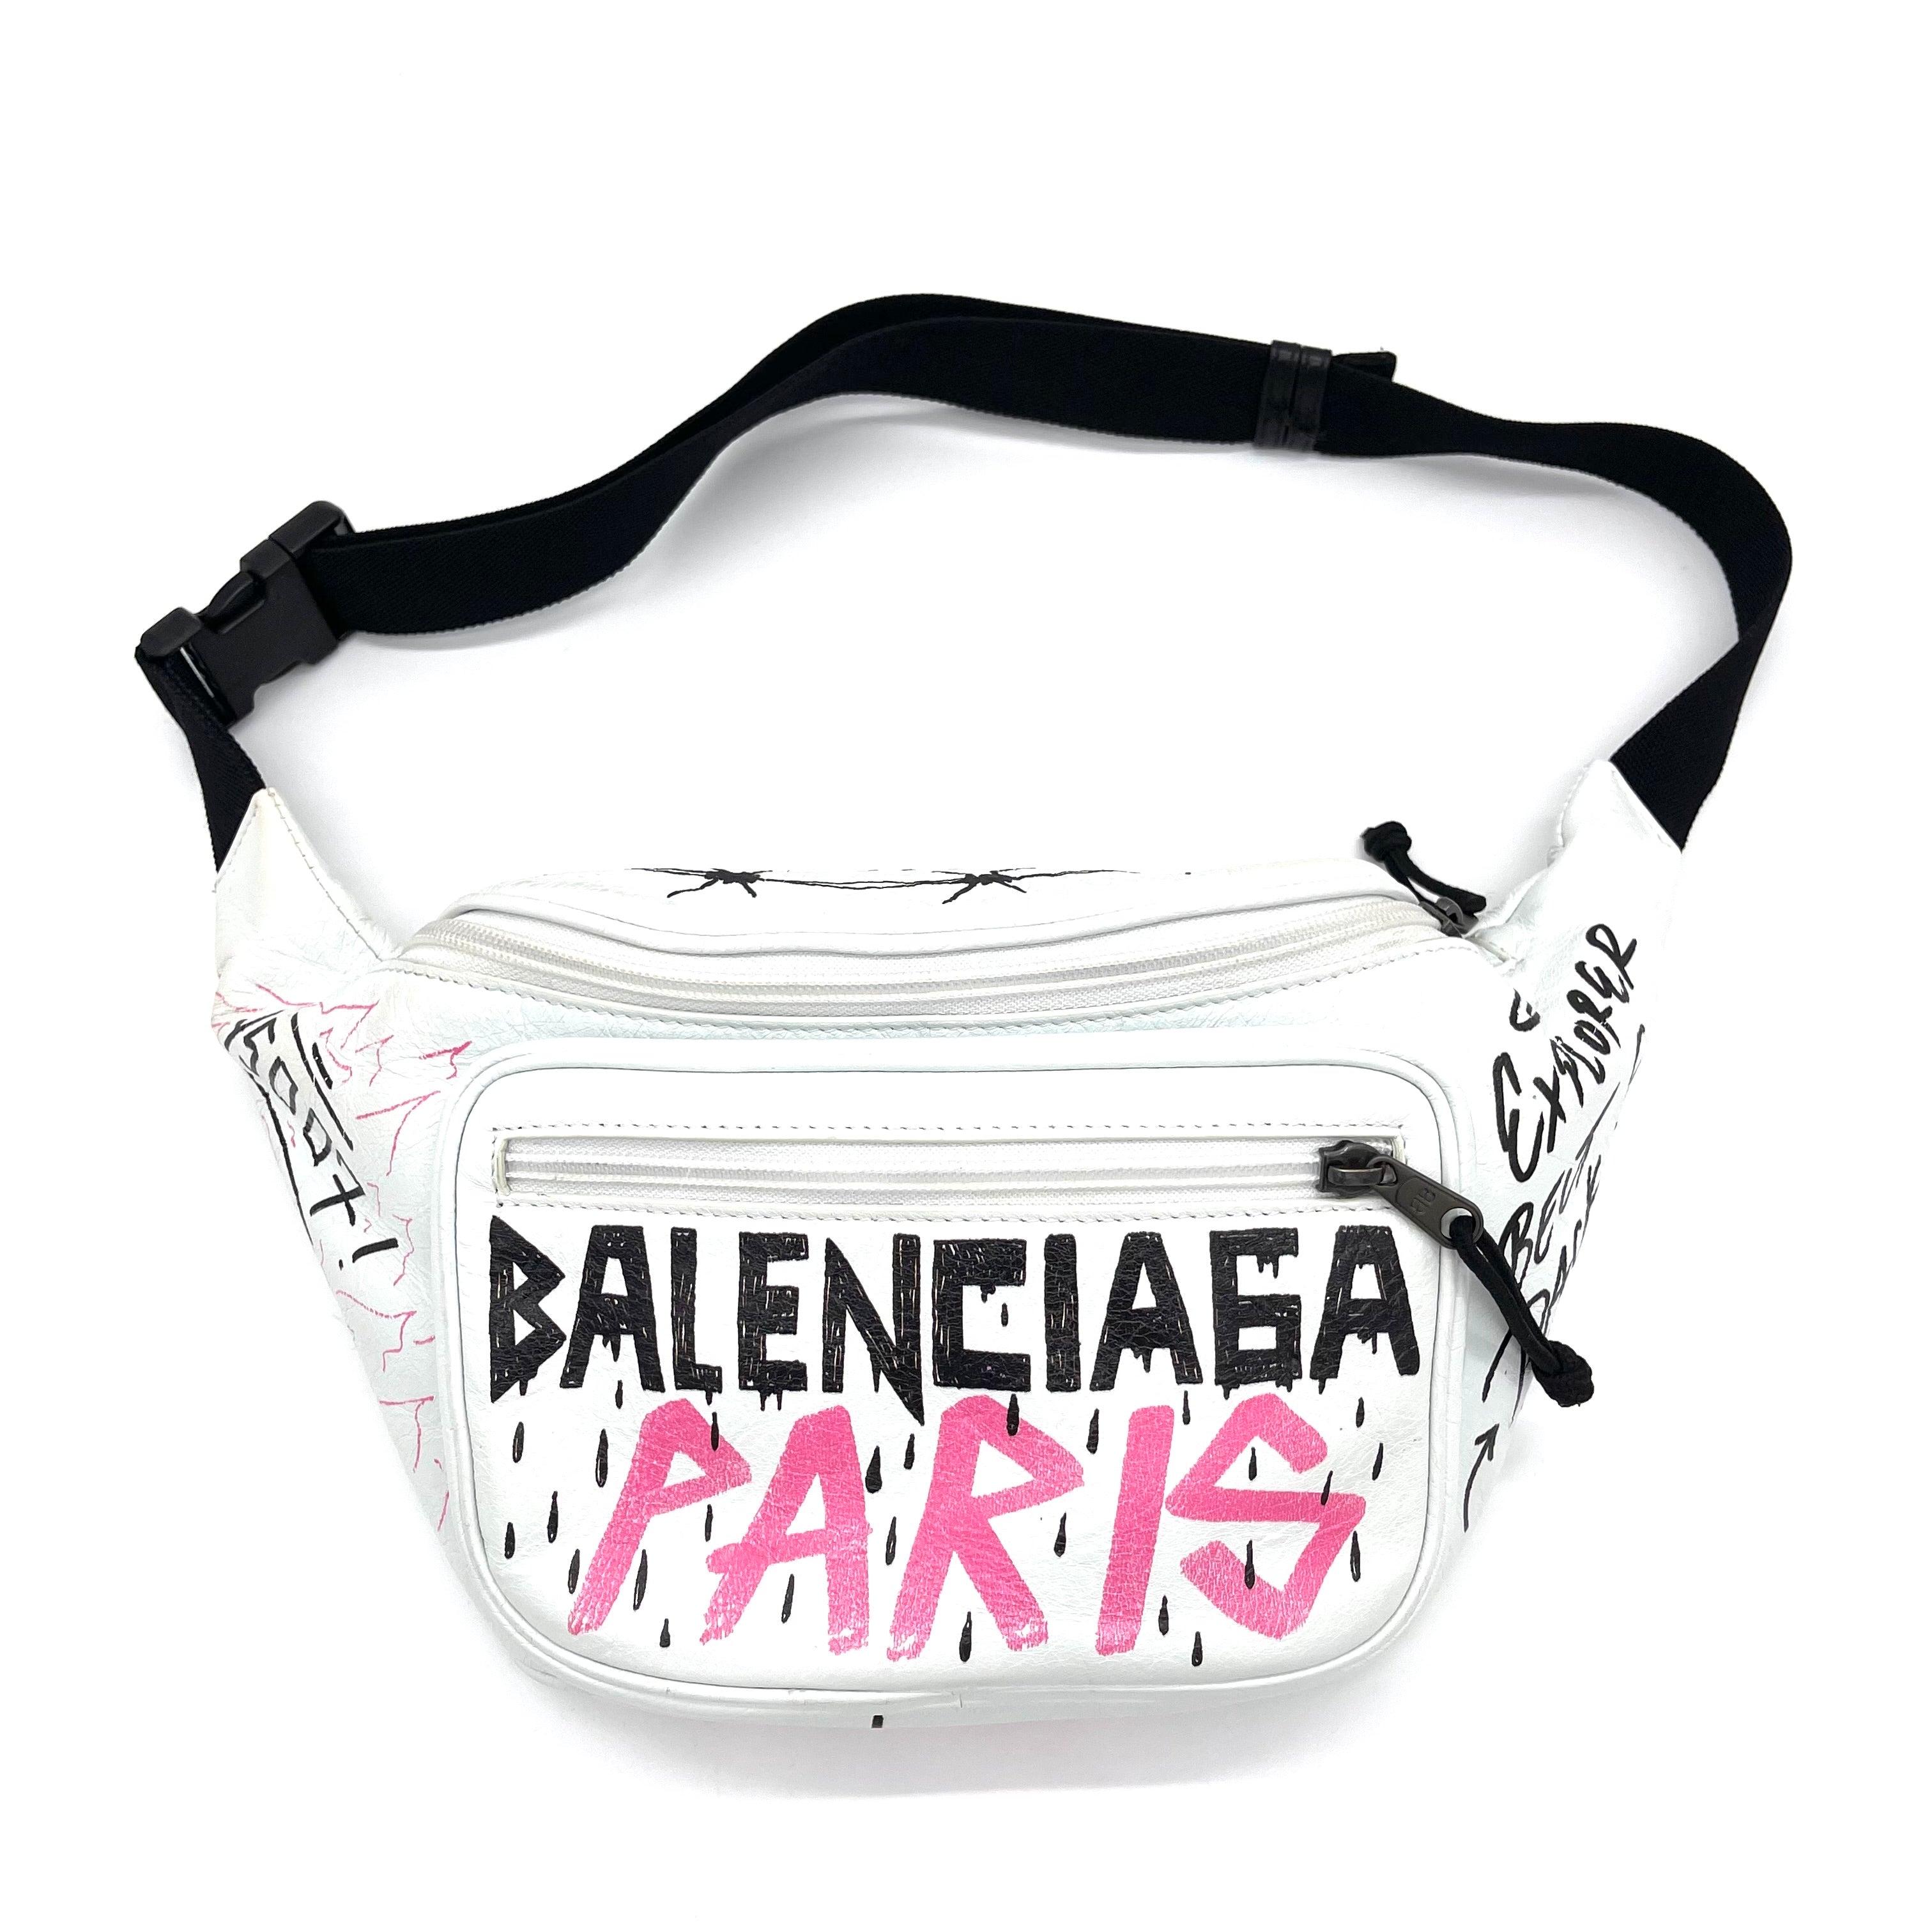 Balenciaga Explorer Graffiti Belt Bag